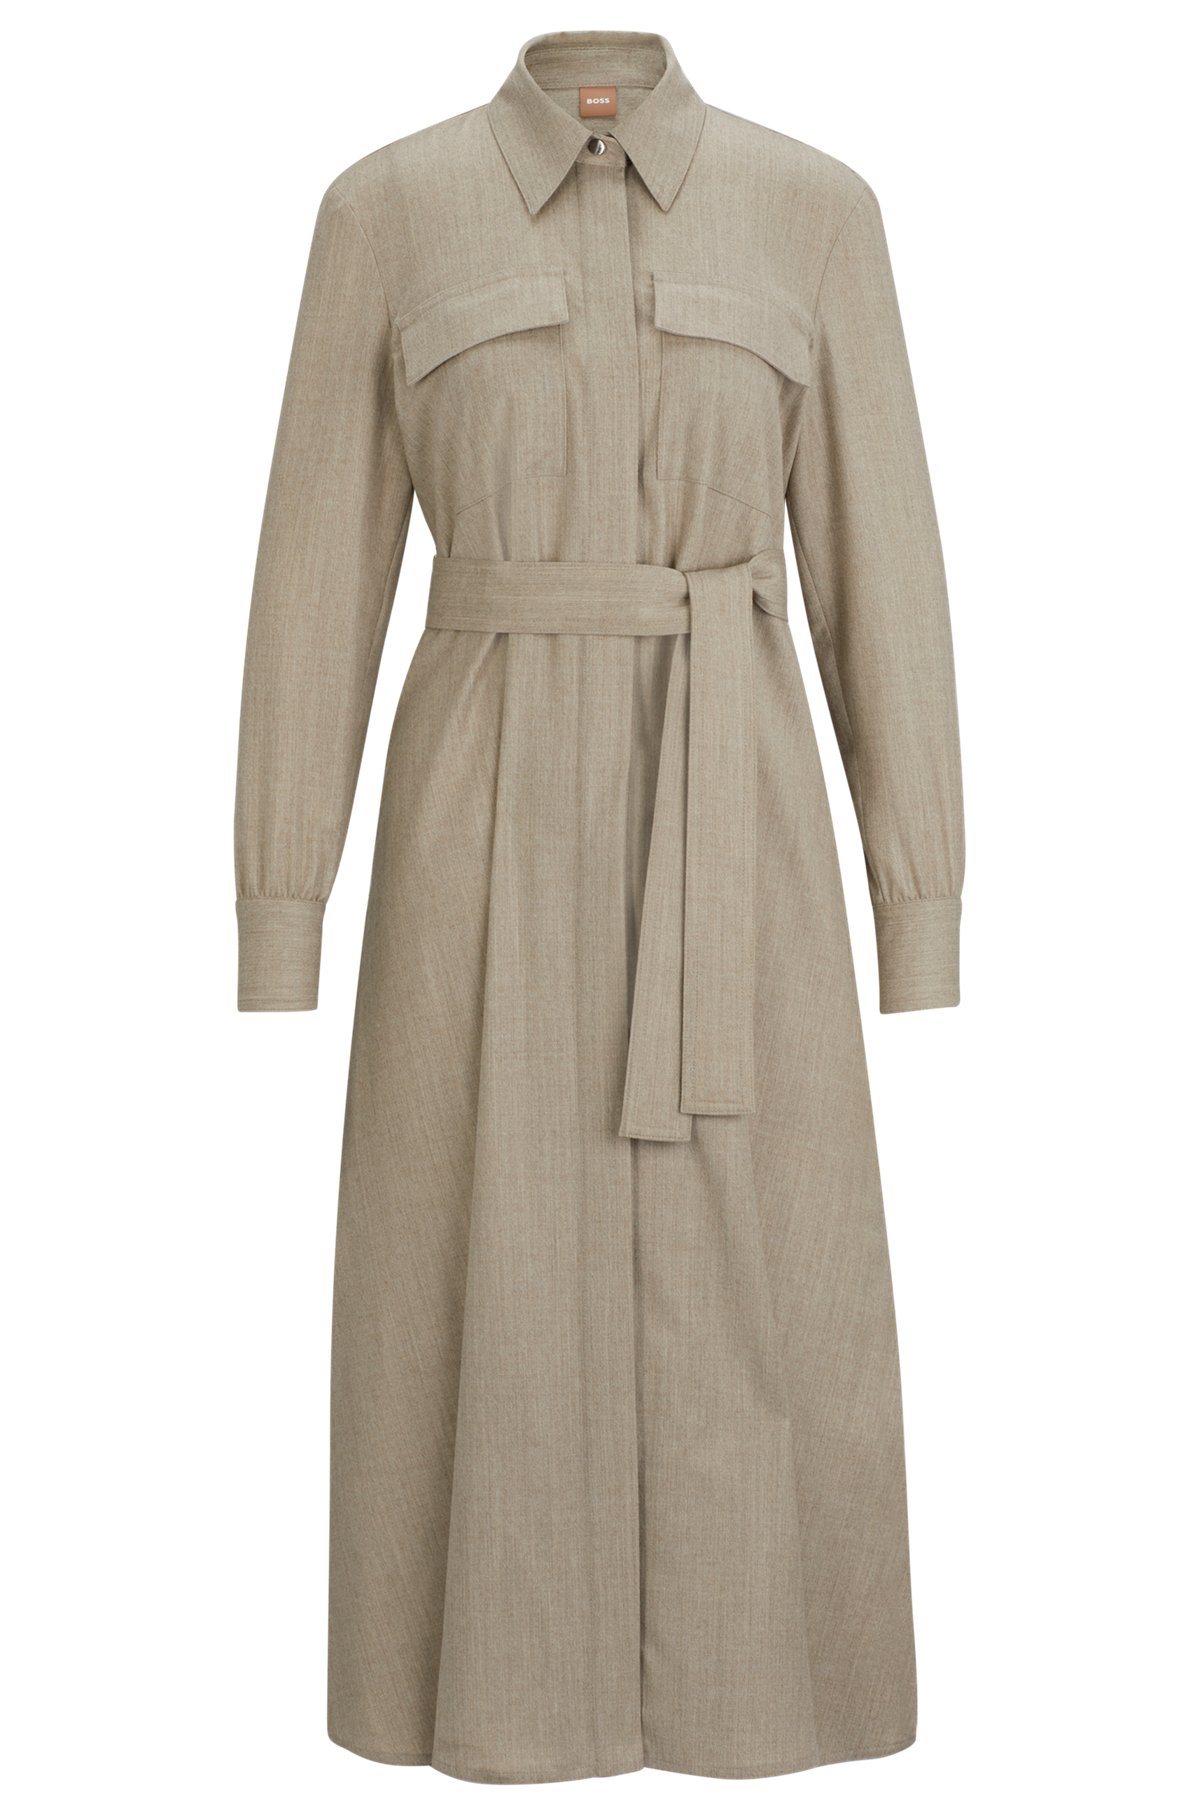 Belted shirt dress in melange stretch-wool flannel, Light Beige